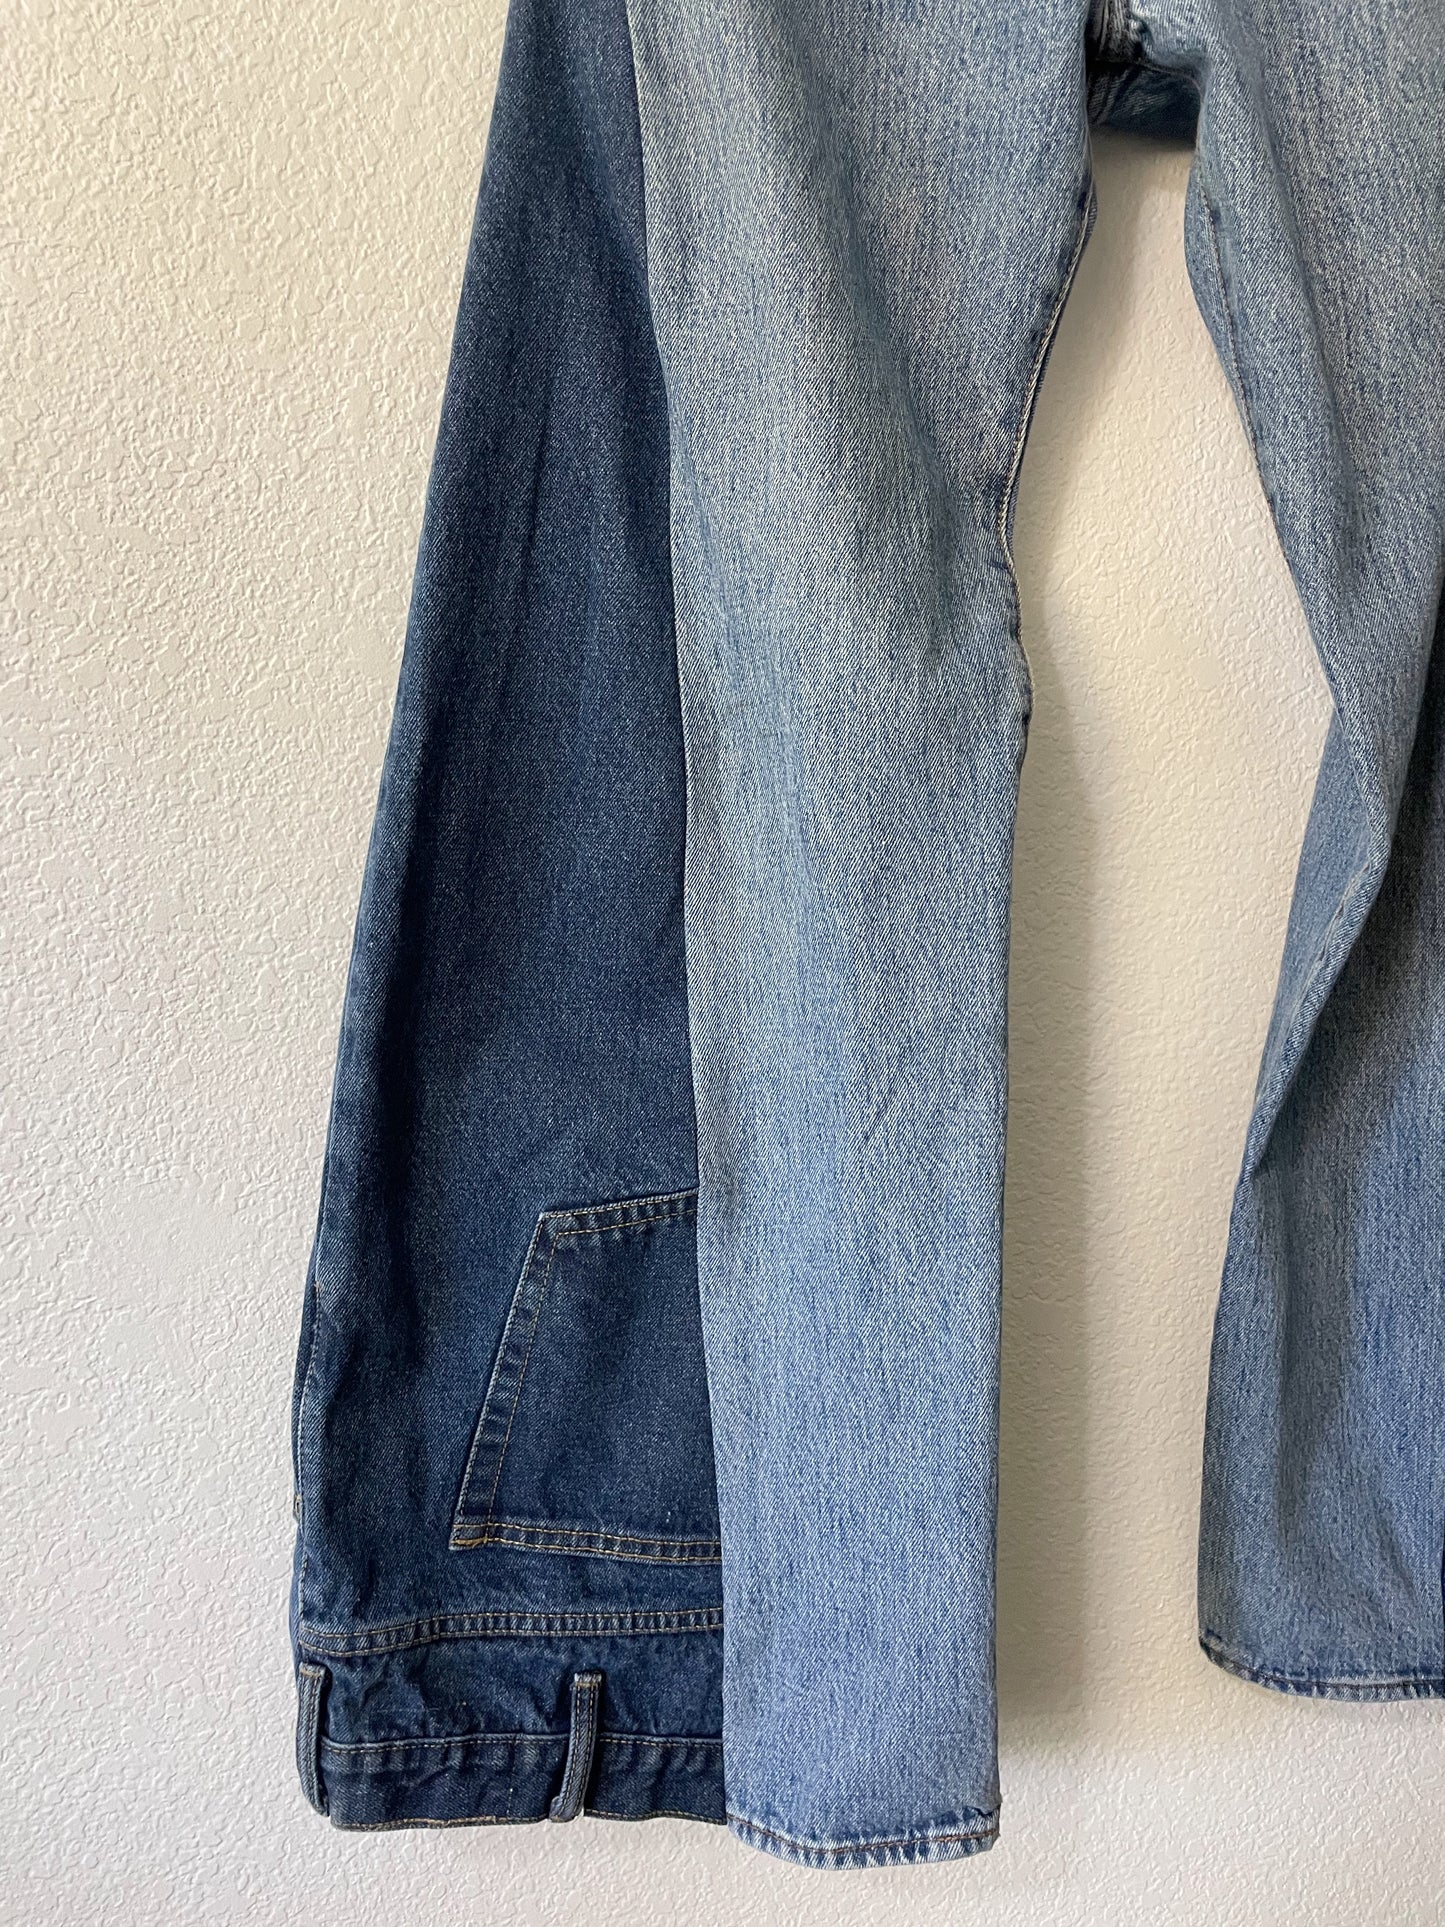 Upcycled Denim Jeans